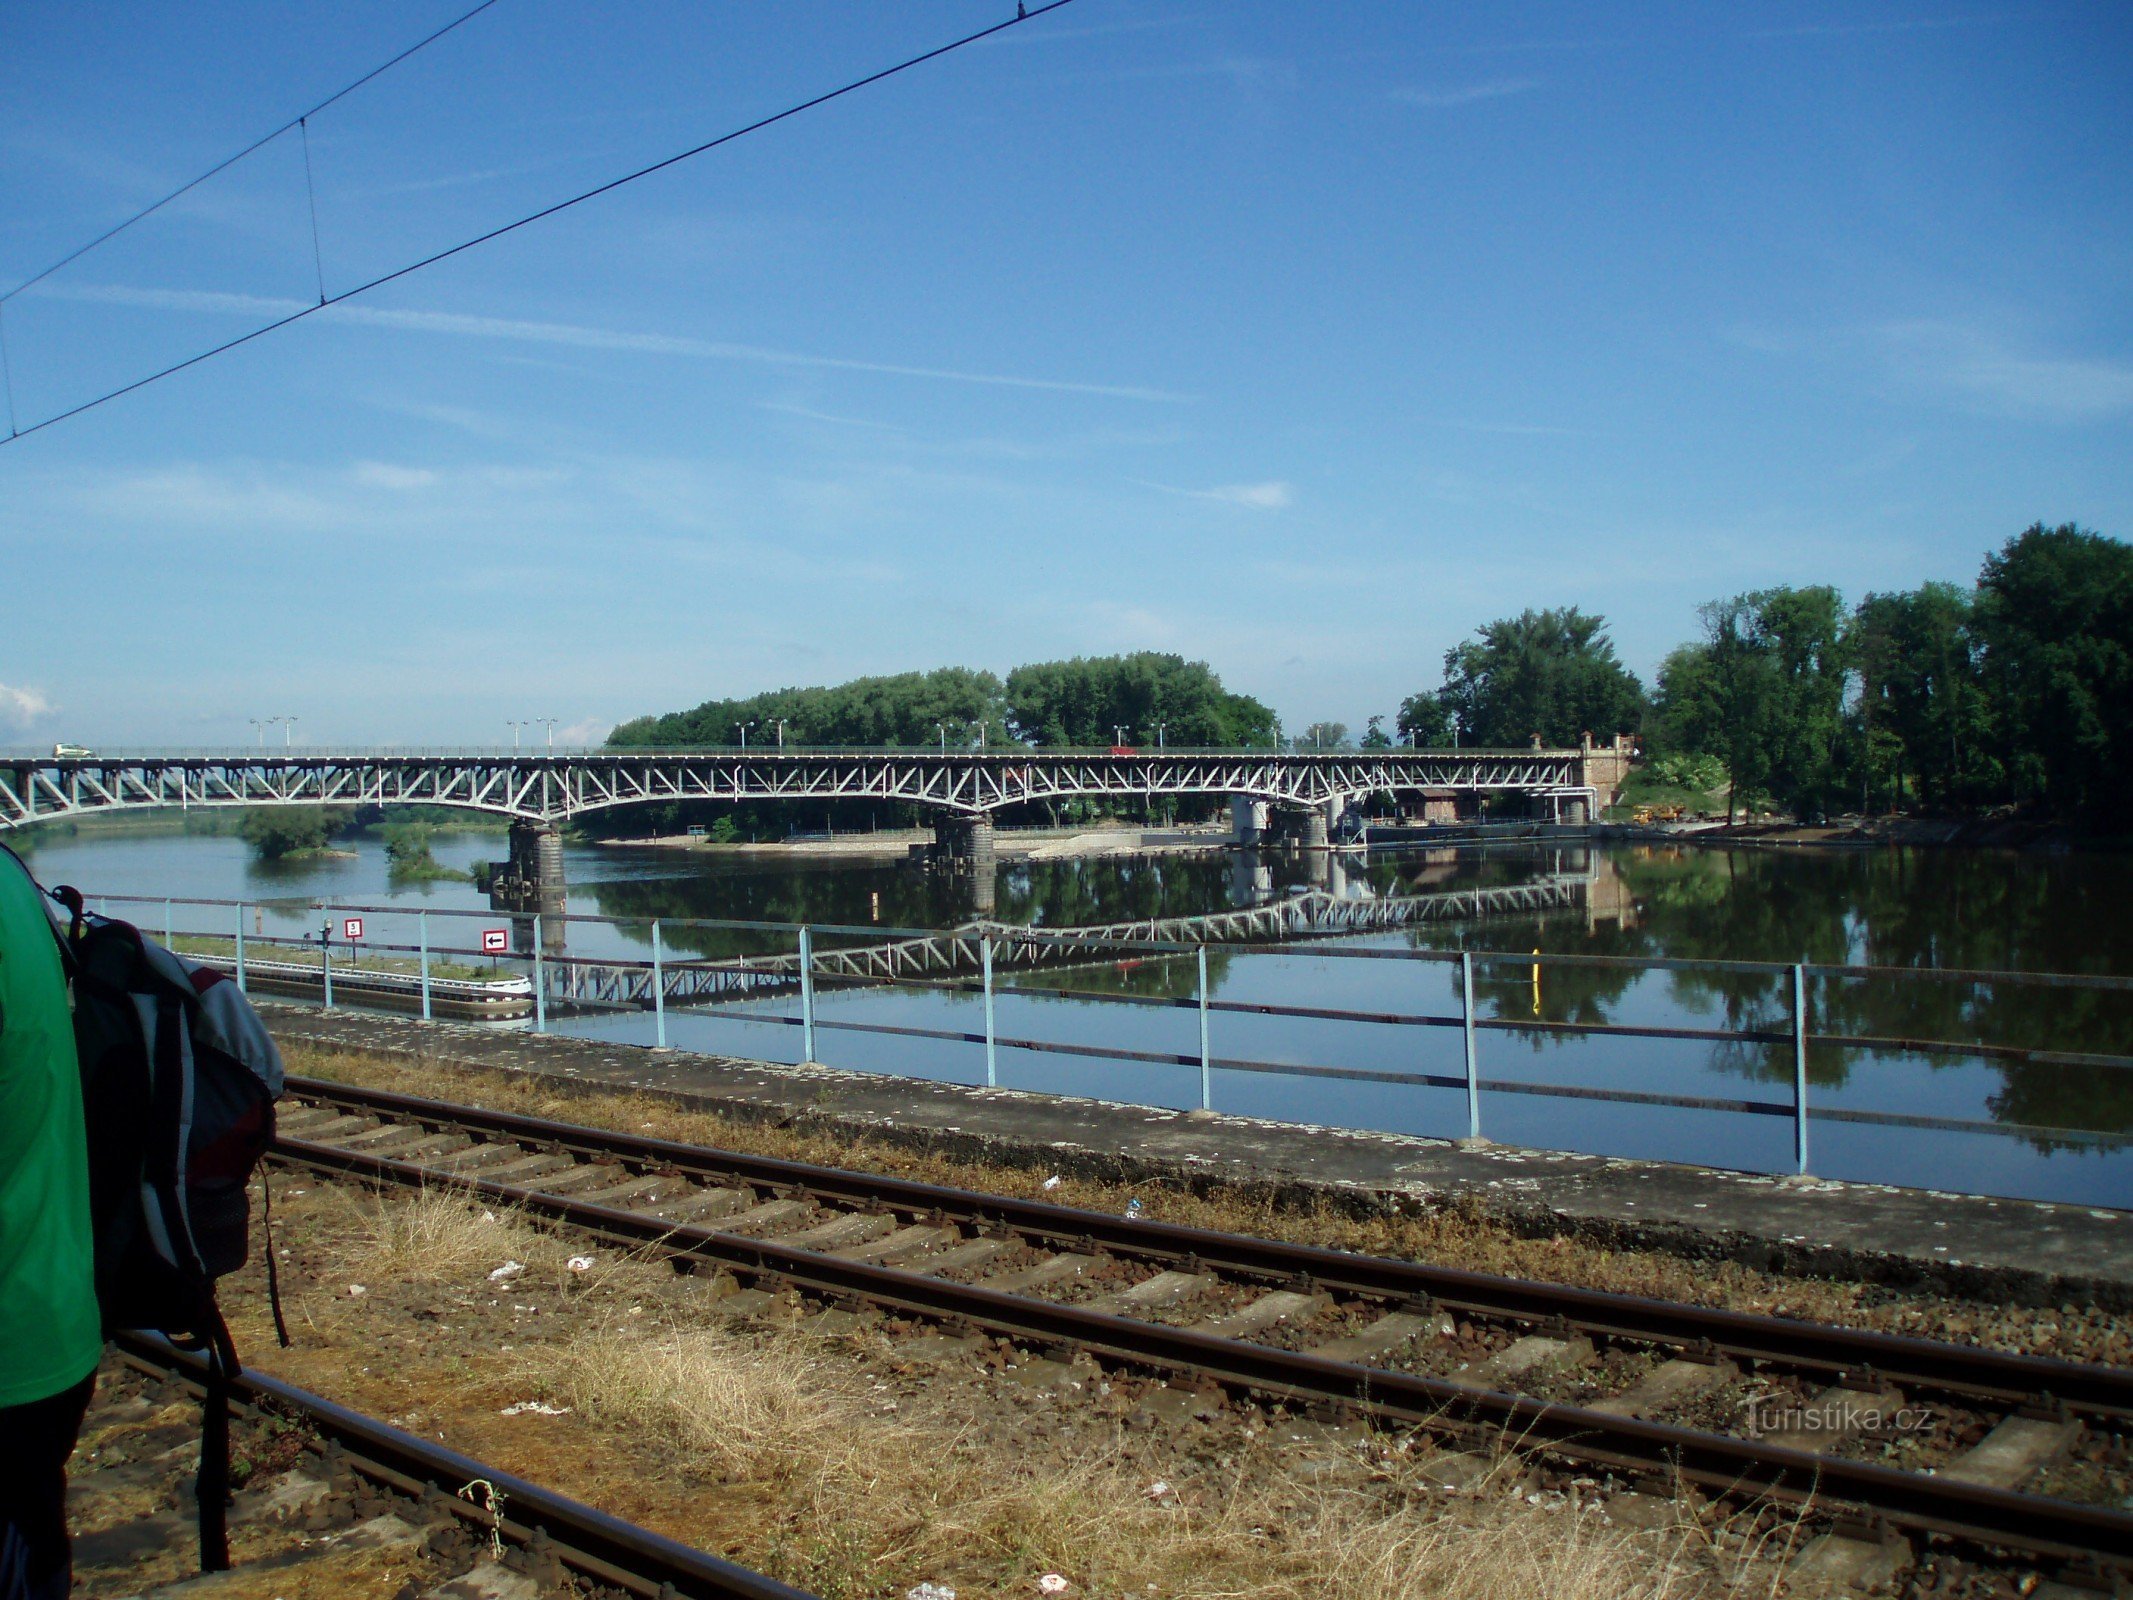 Roudnice nad Labem 桥